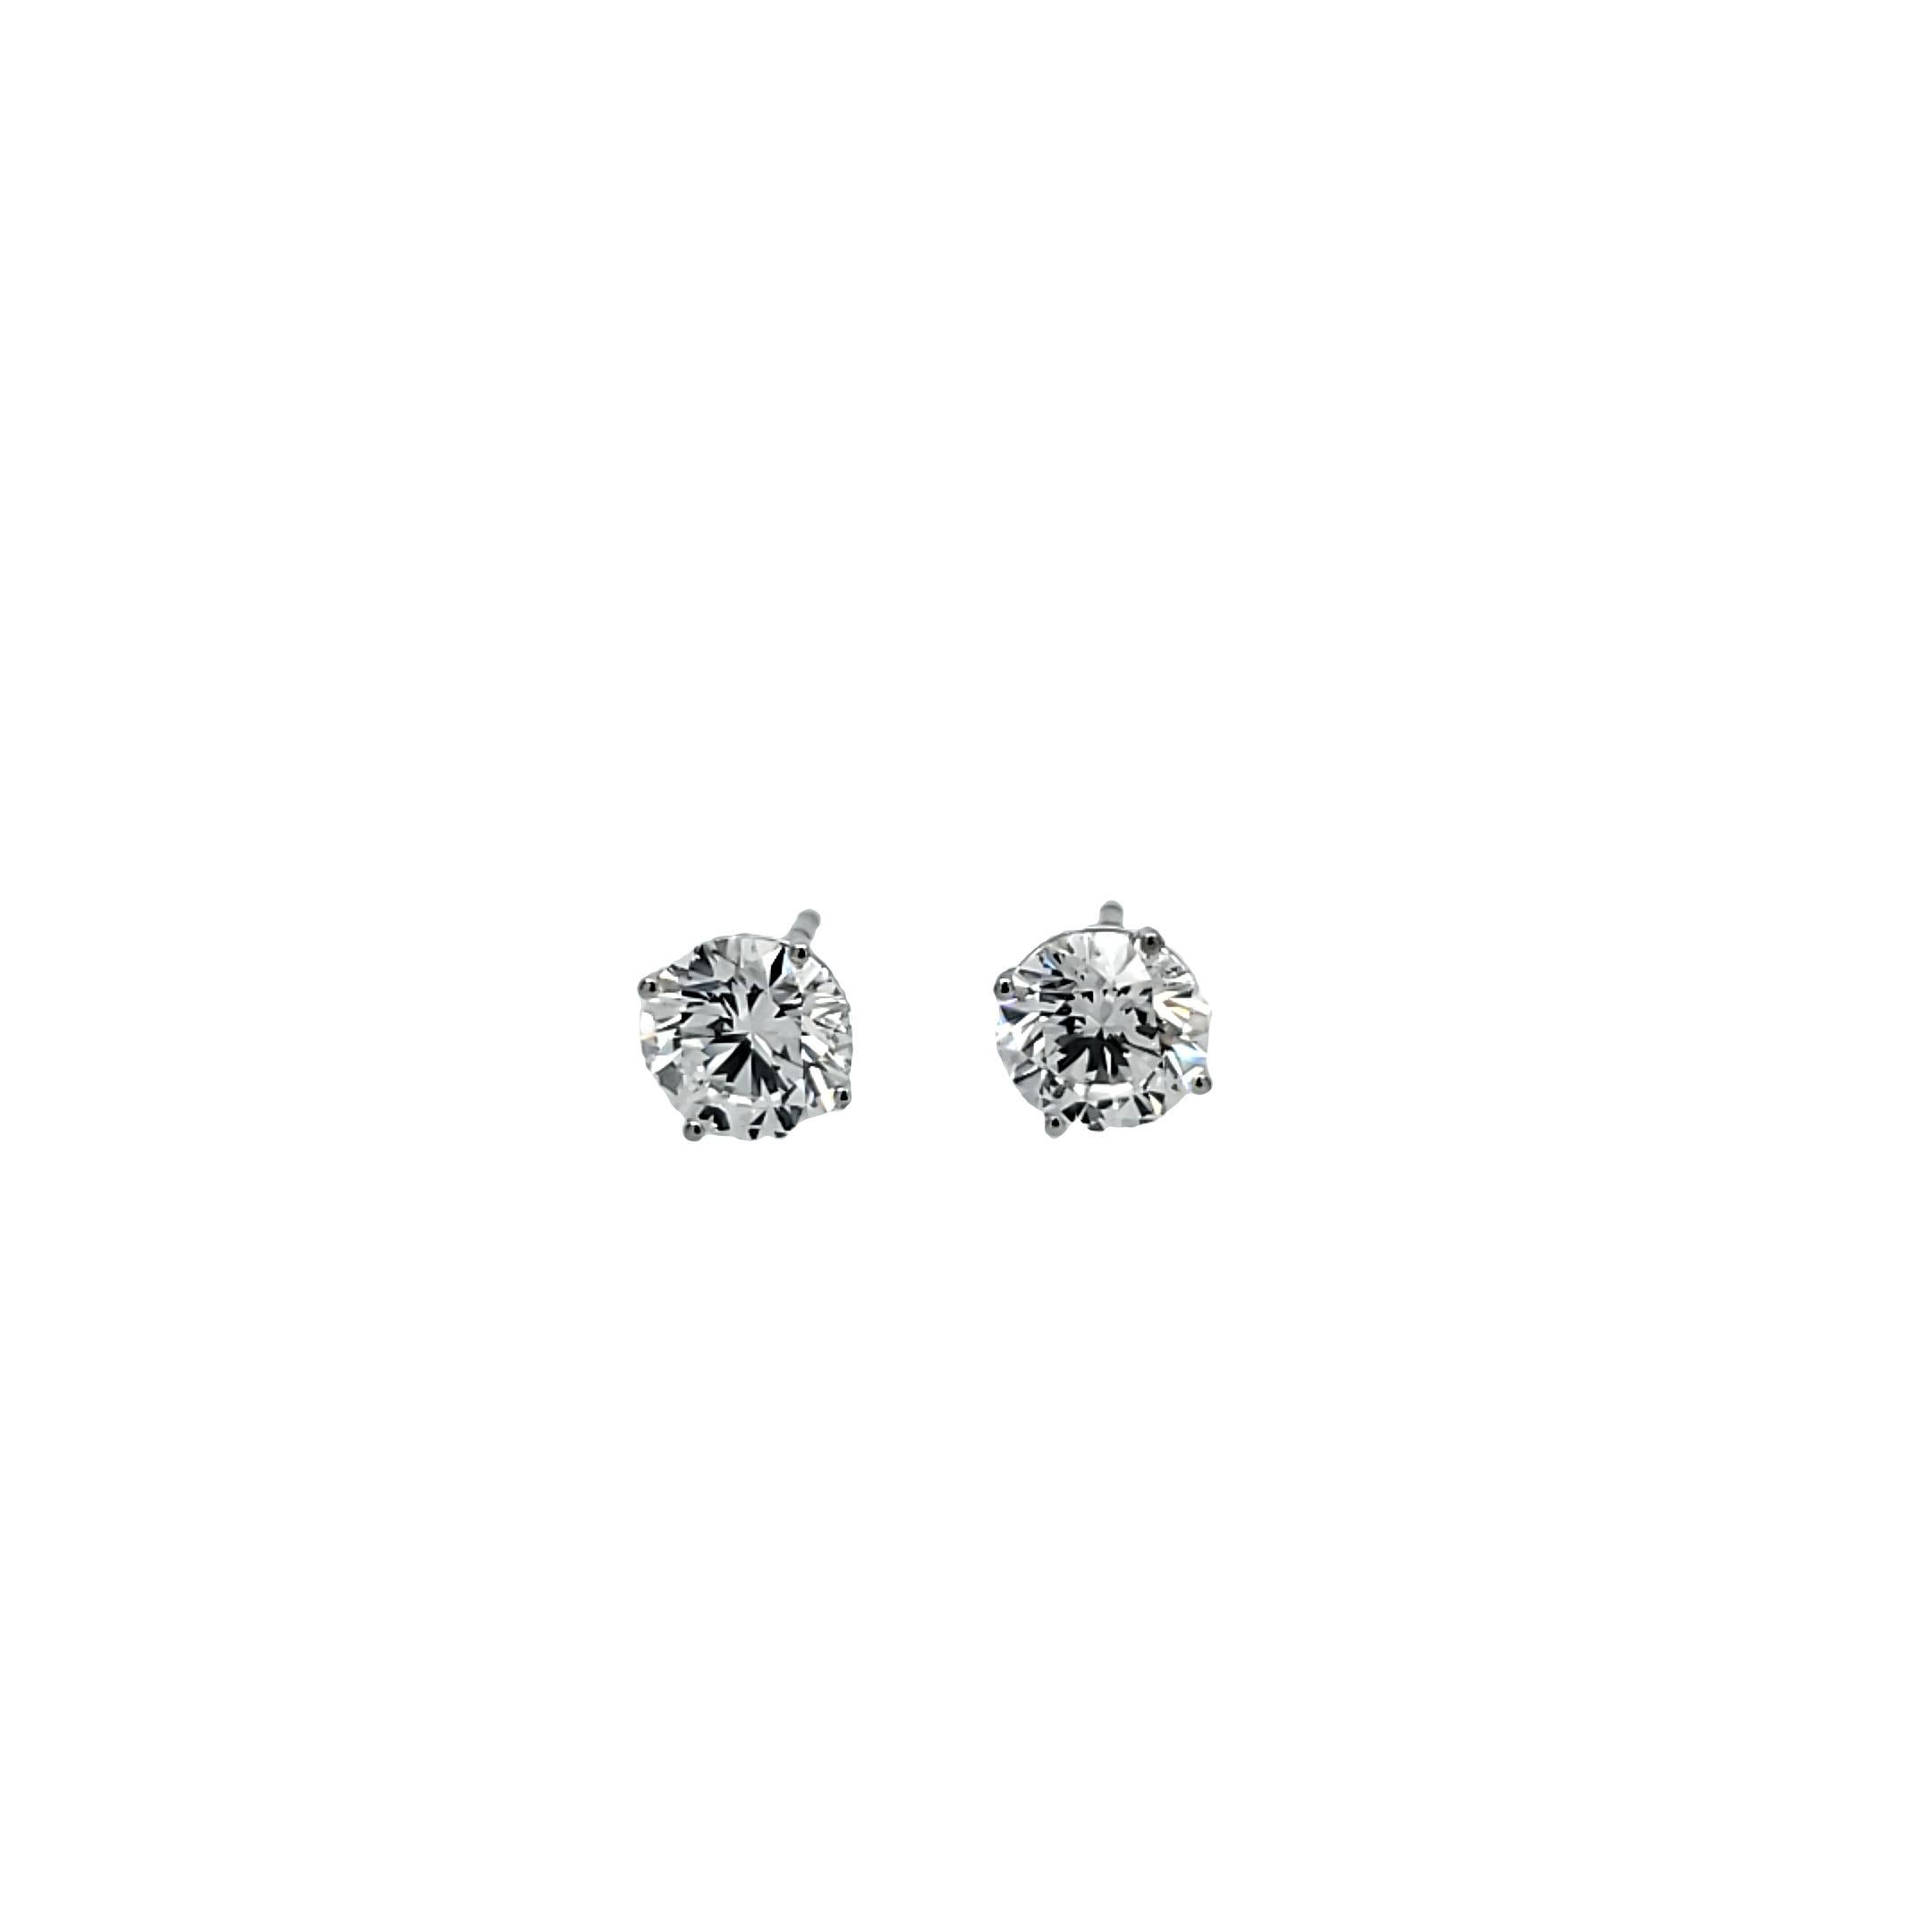 4 carat diamond earrings price